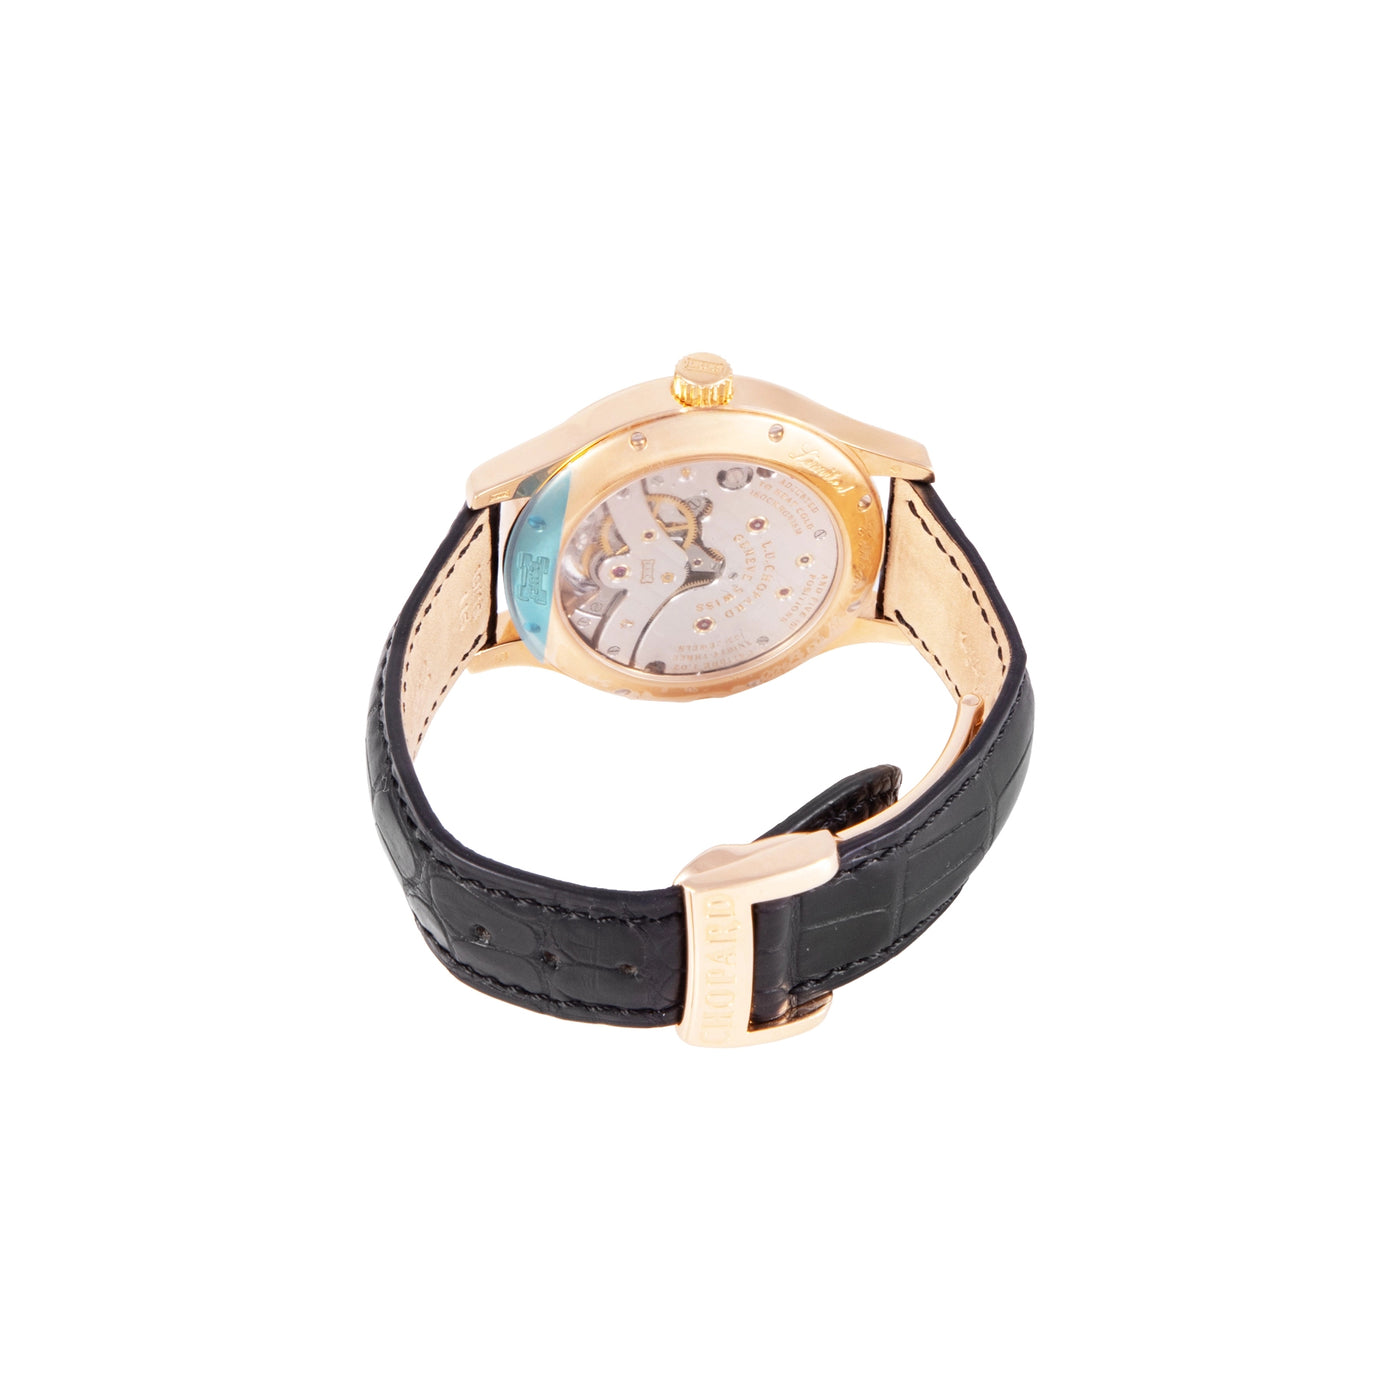 Chopard L.U.C Tourbillon 161869-5001 | Timepiece360